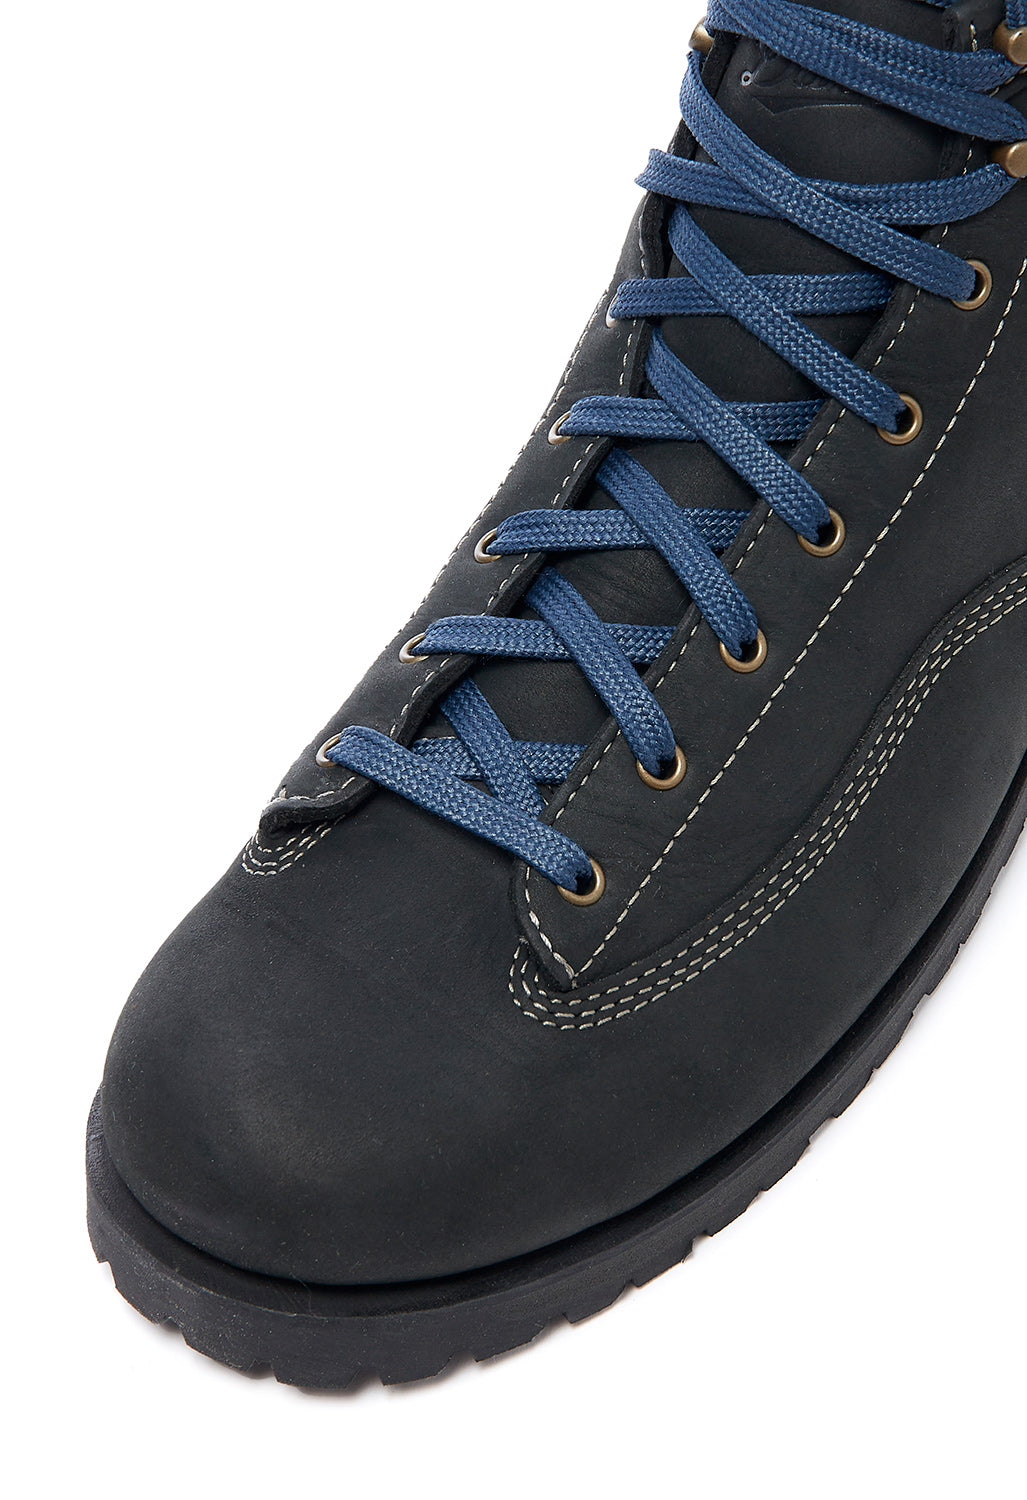 Danner Men's Cedar Grove Boots - Black GTX